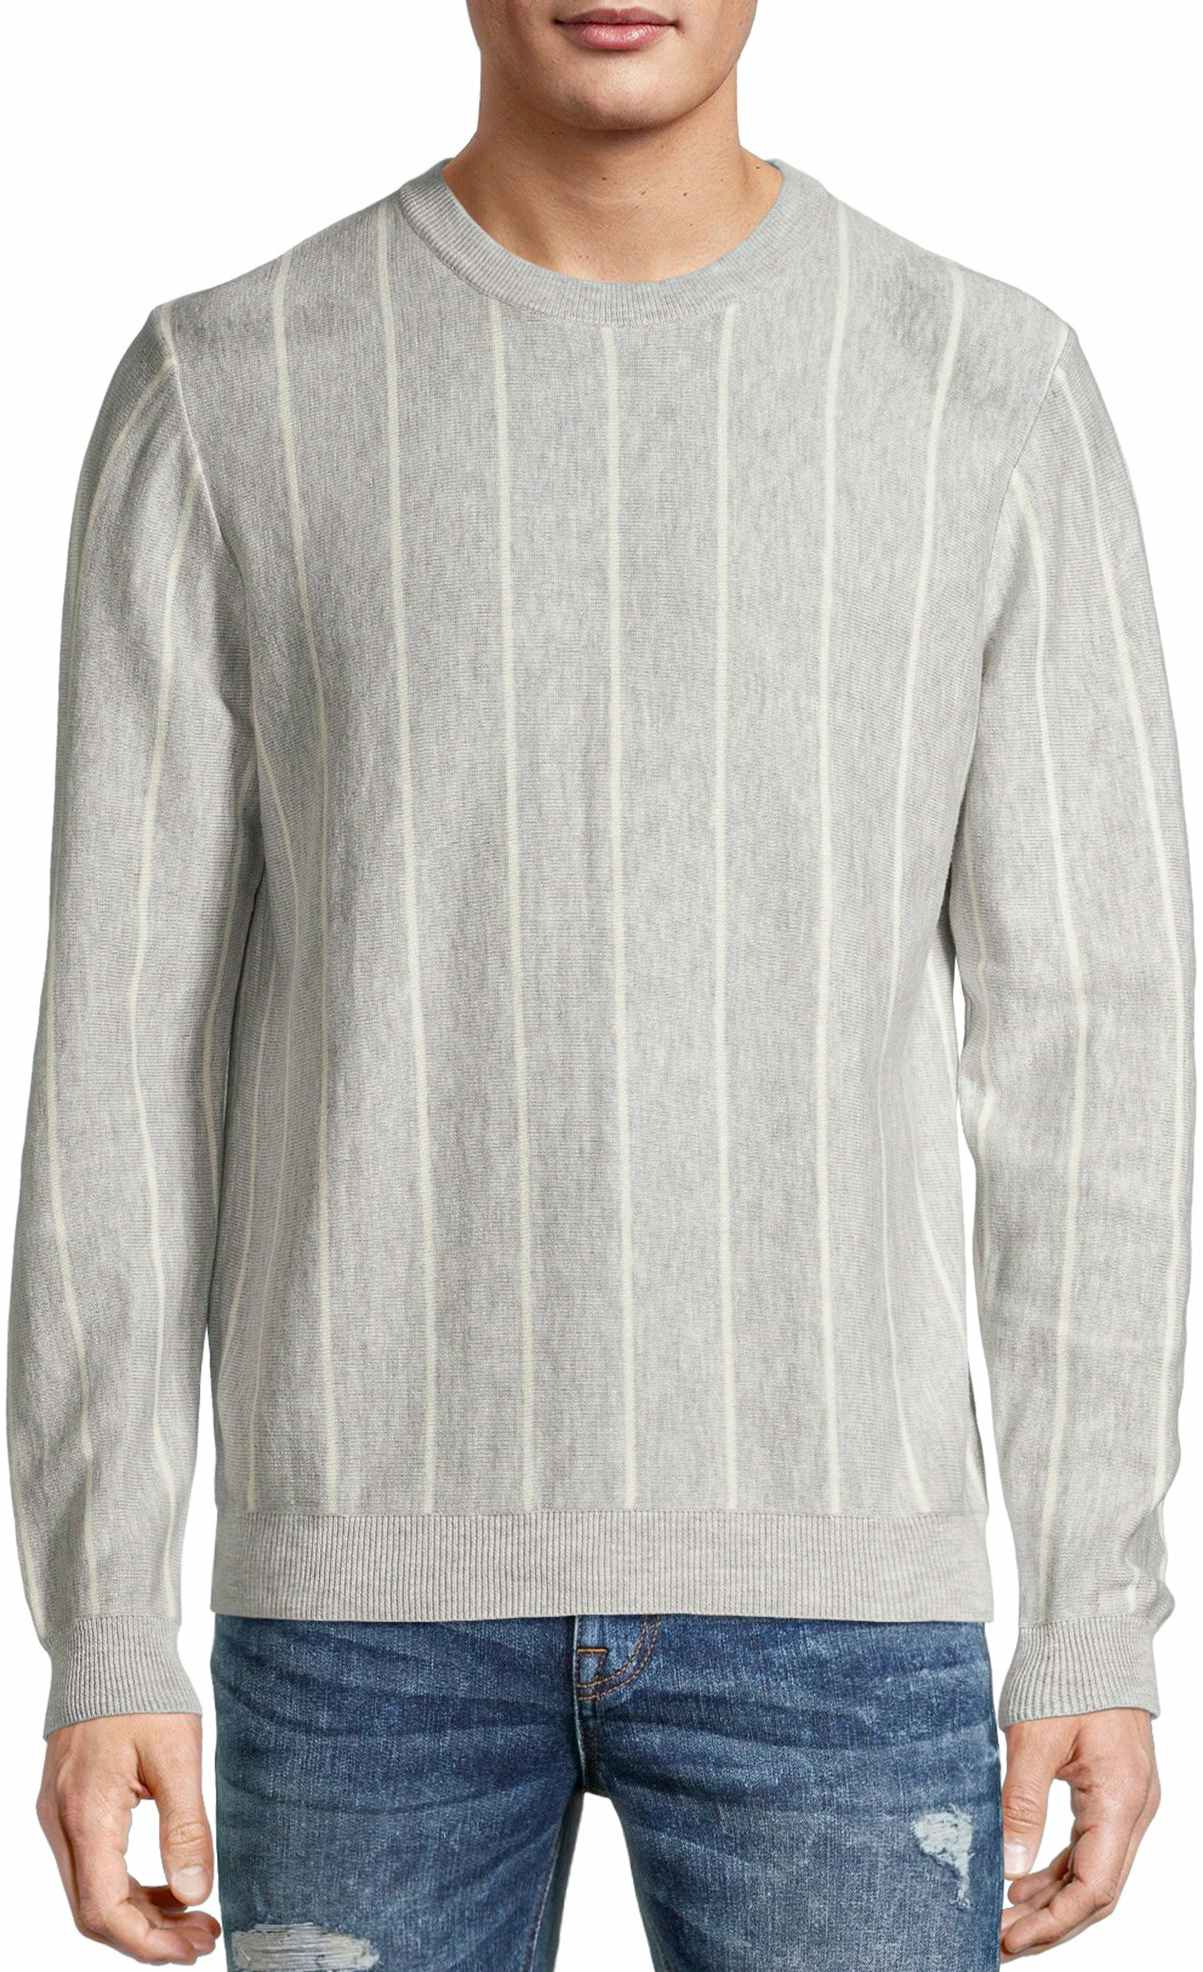 walmart-tribekka-44-vertical-striped-crewneck-sweater-2022